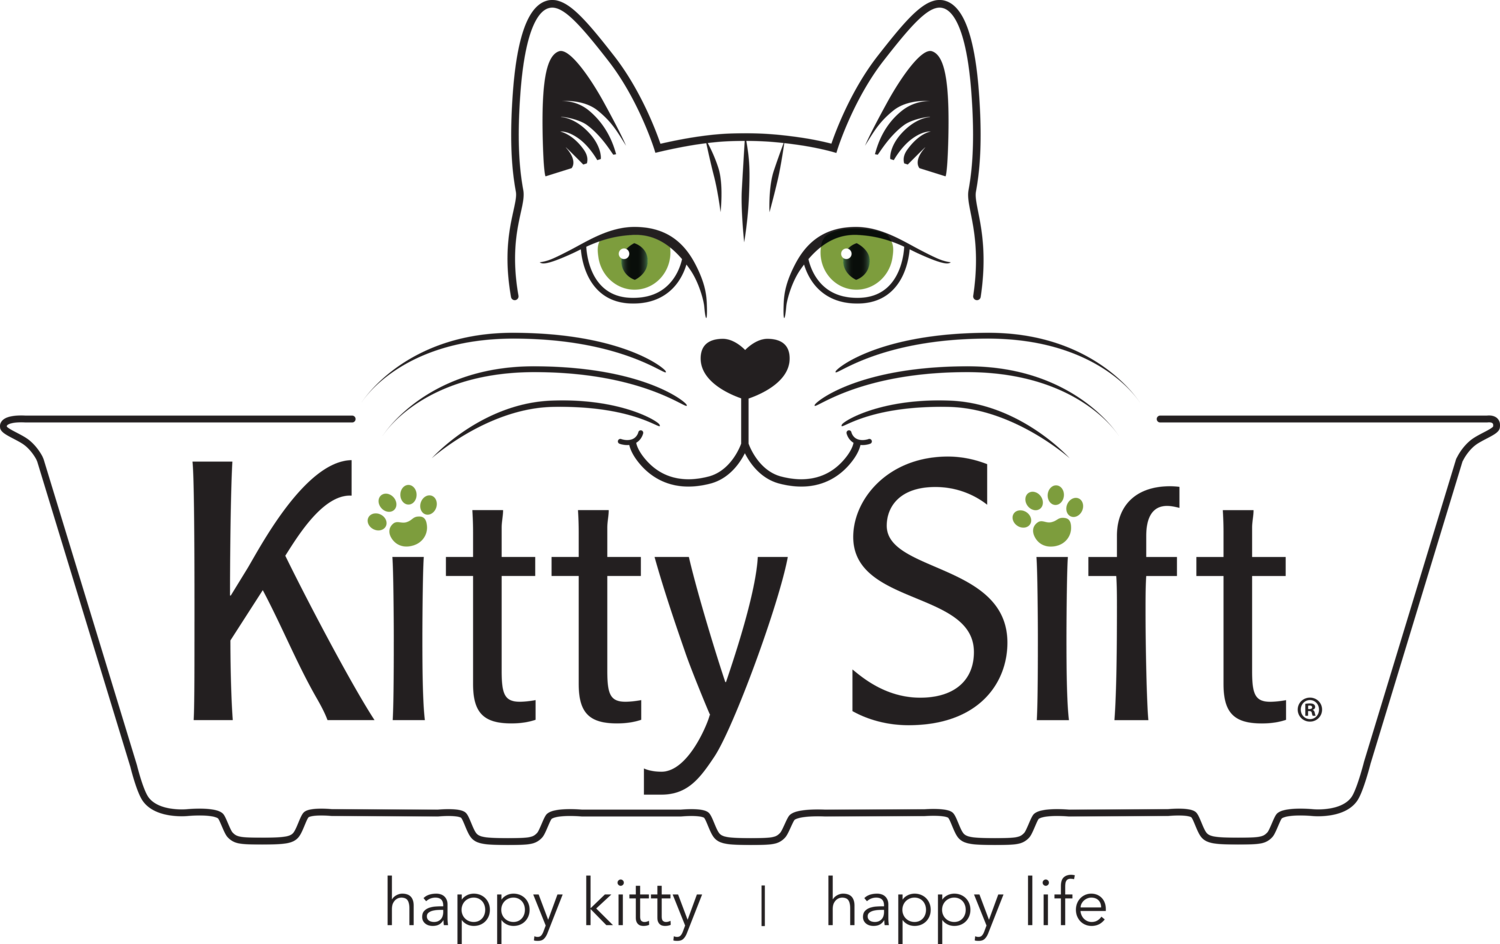 Kitty Sift®